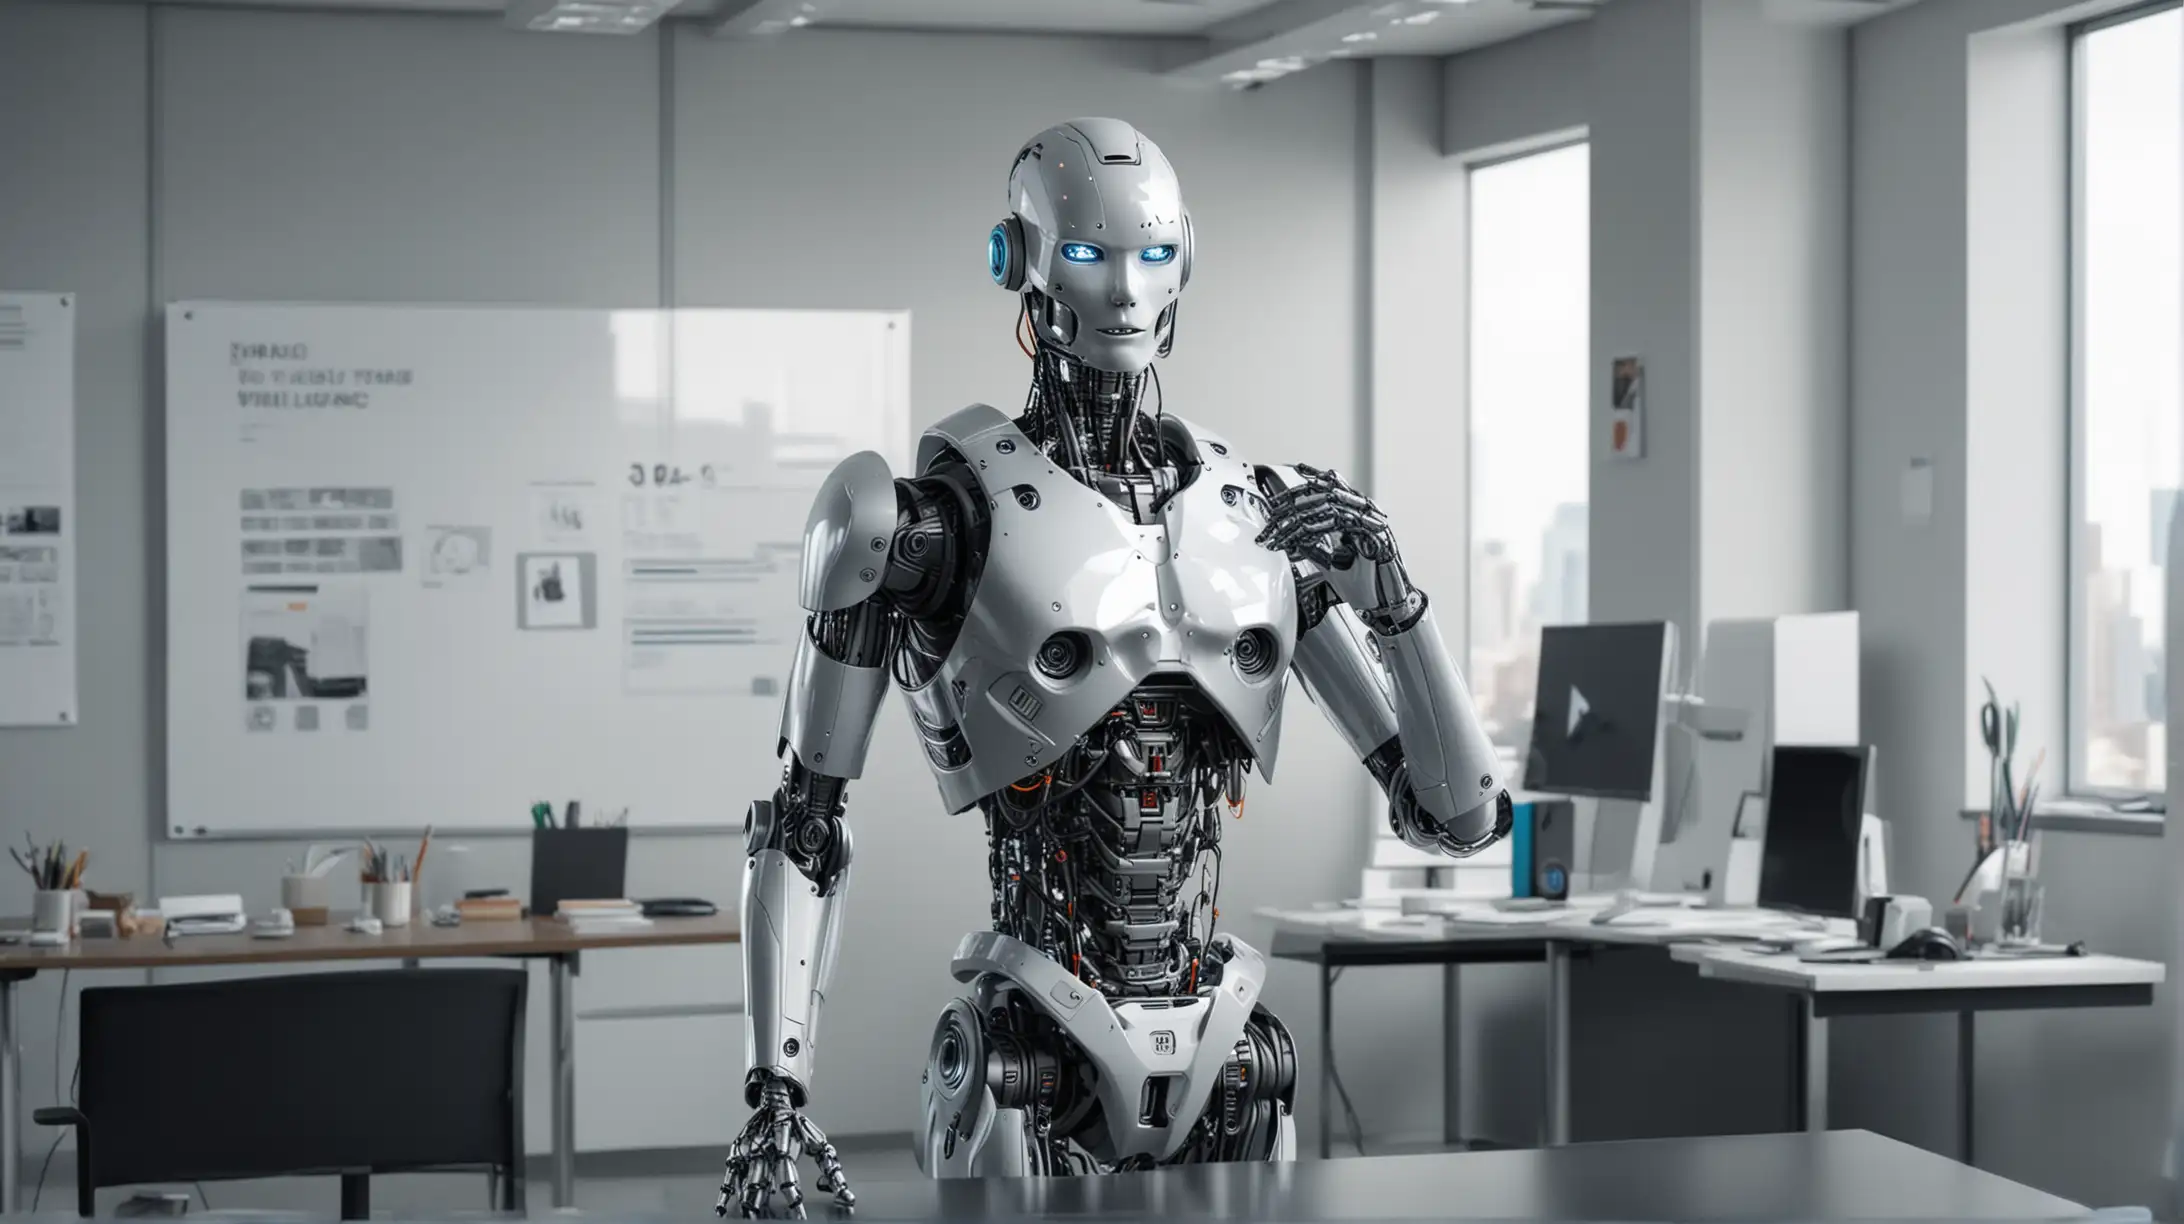 super realistic，3024年，一个机器人，站在办公室里紧张的打电话，未来感十足的透明办公室，高科技的办公工具和虚拟屏幕，未来设计风格